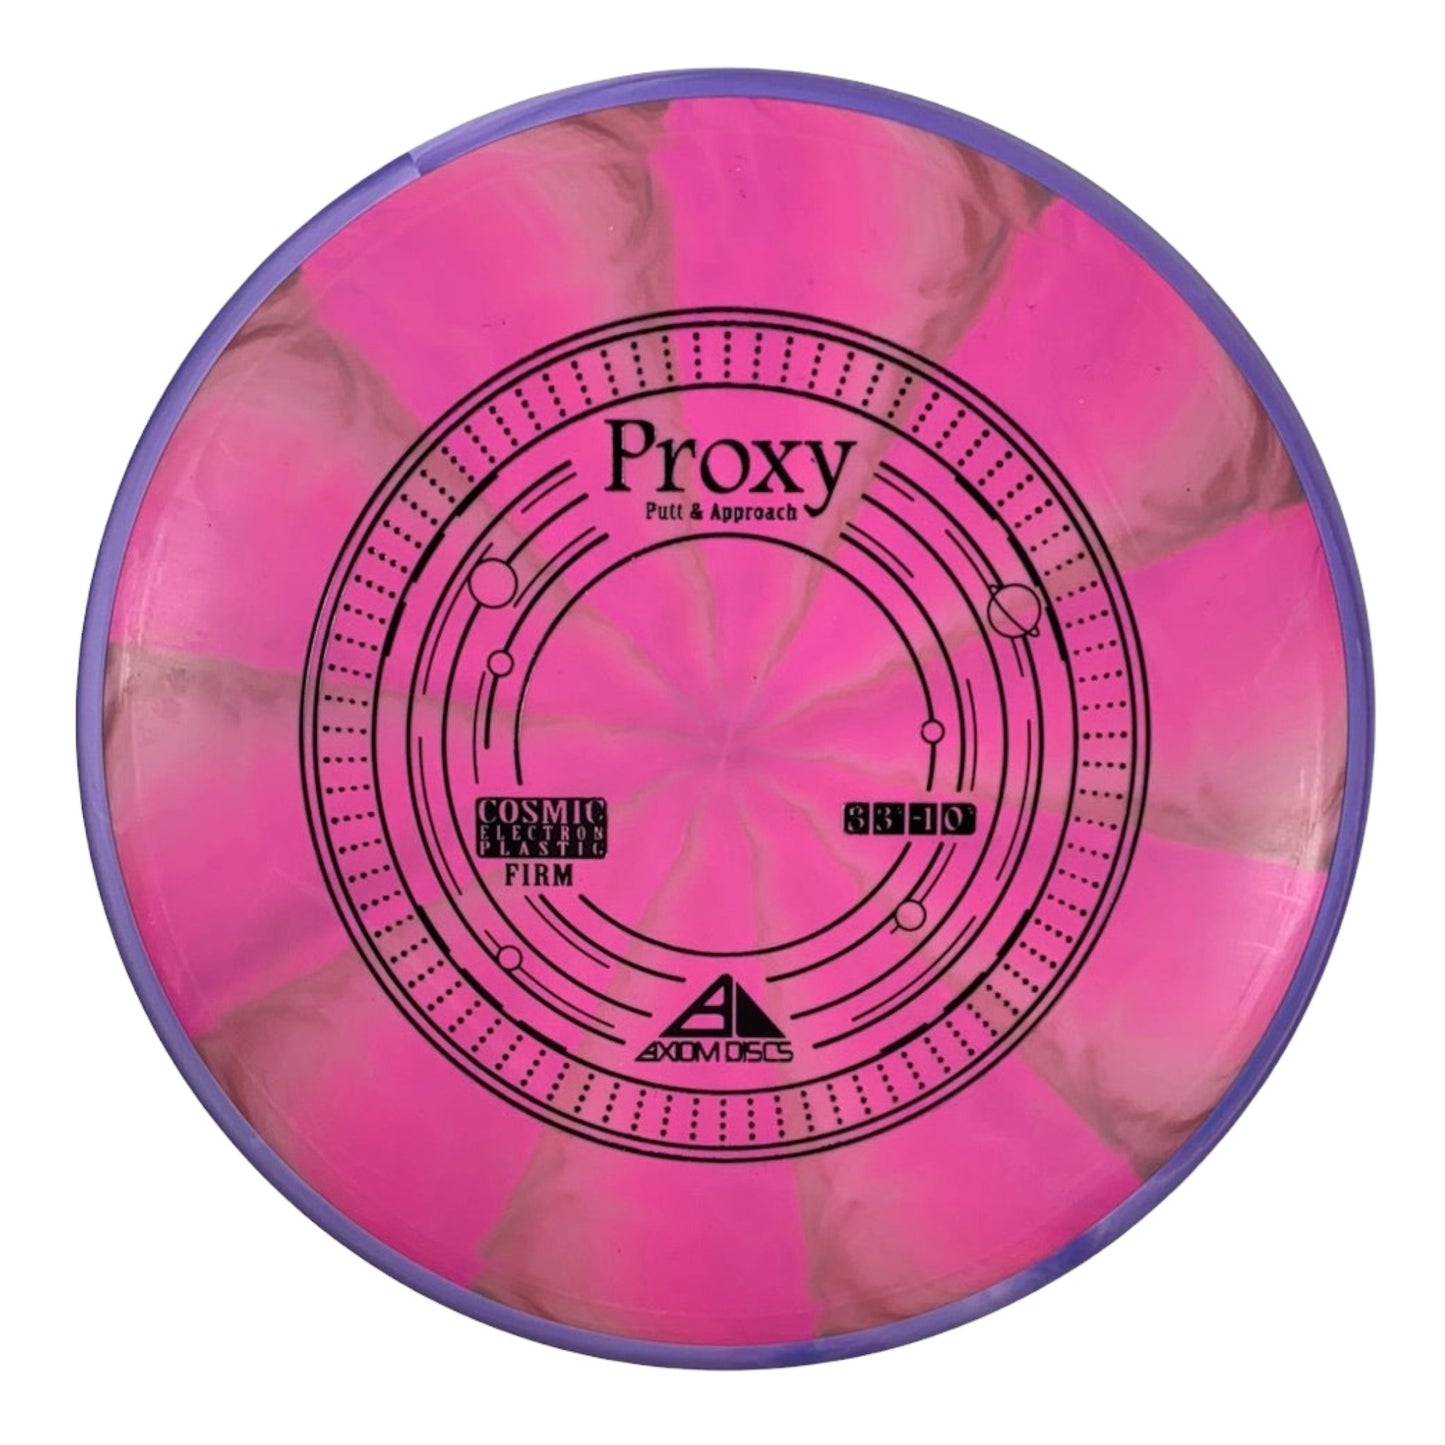 Axiom Discs Proxy | Cosmic Electron Firm | Pink/Purple 173g Disc Golf